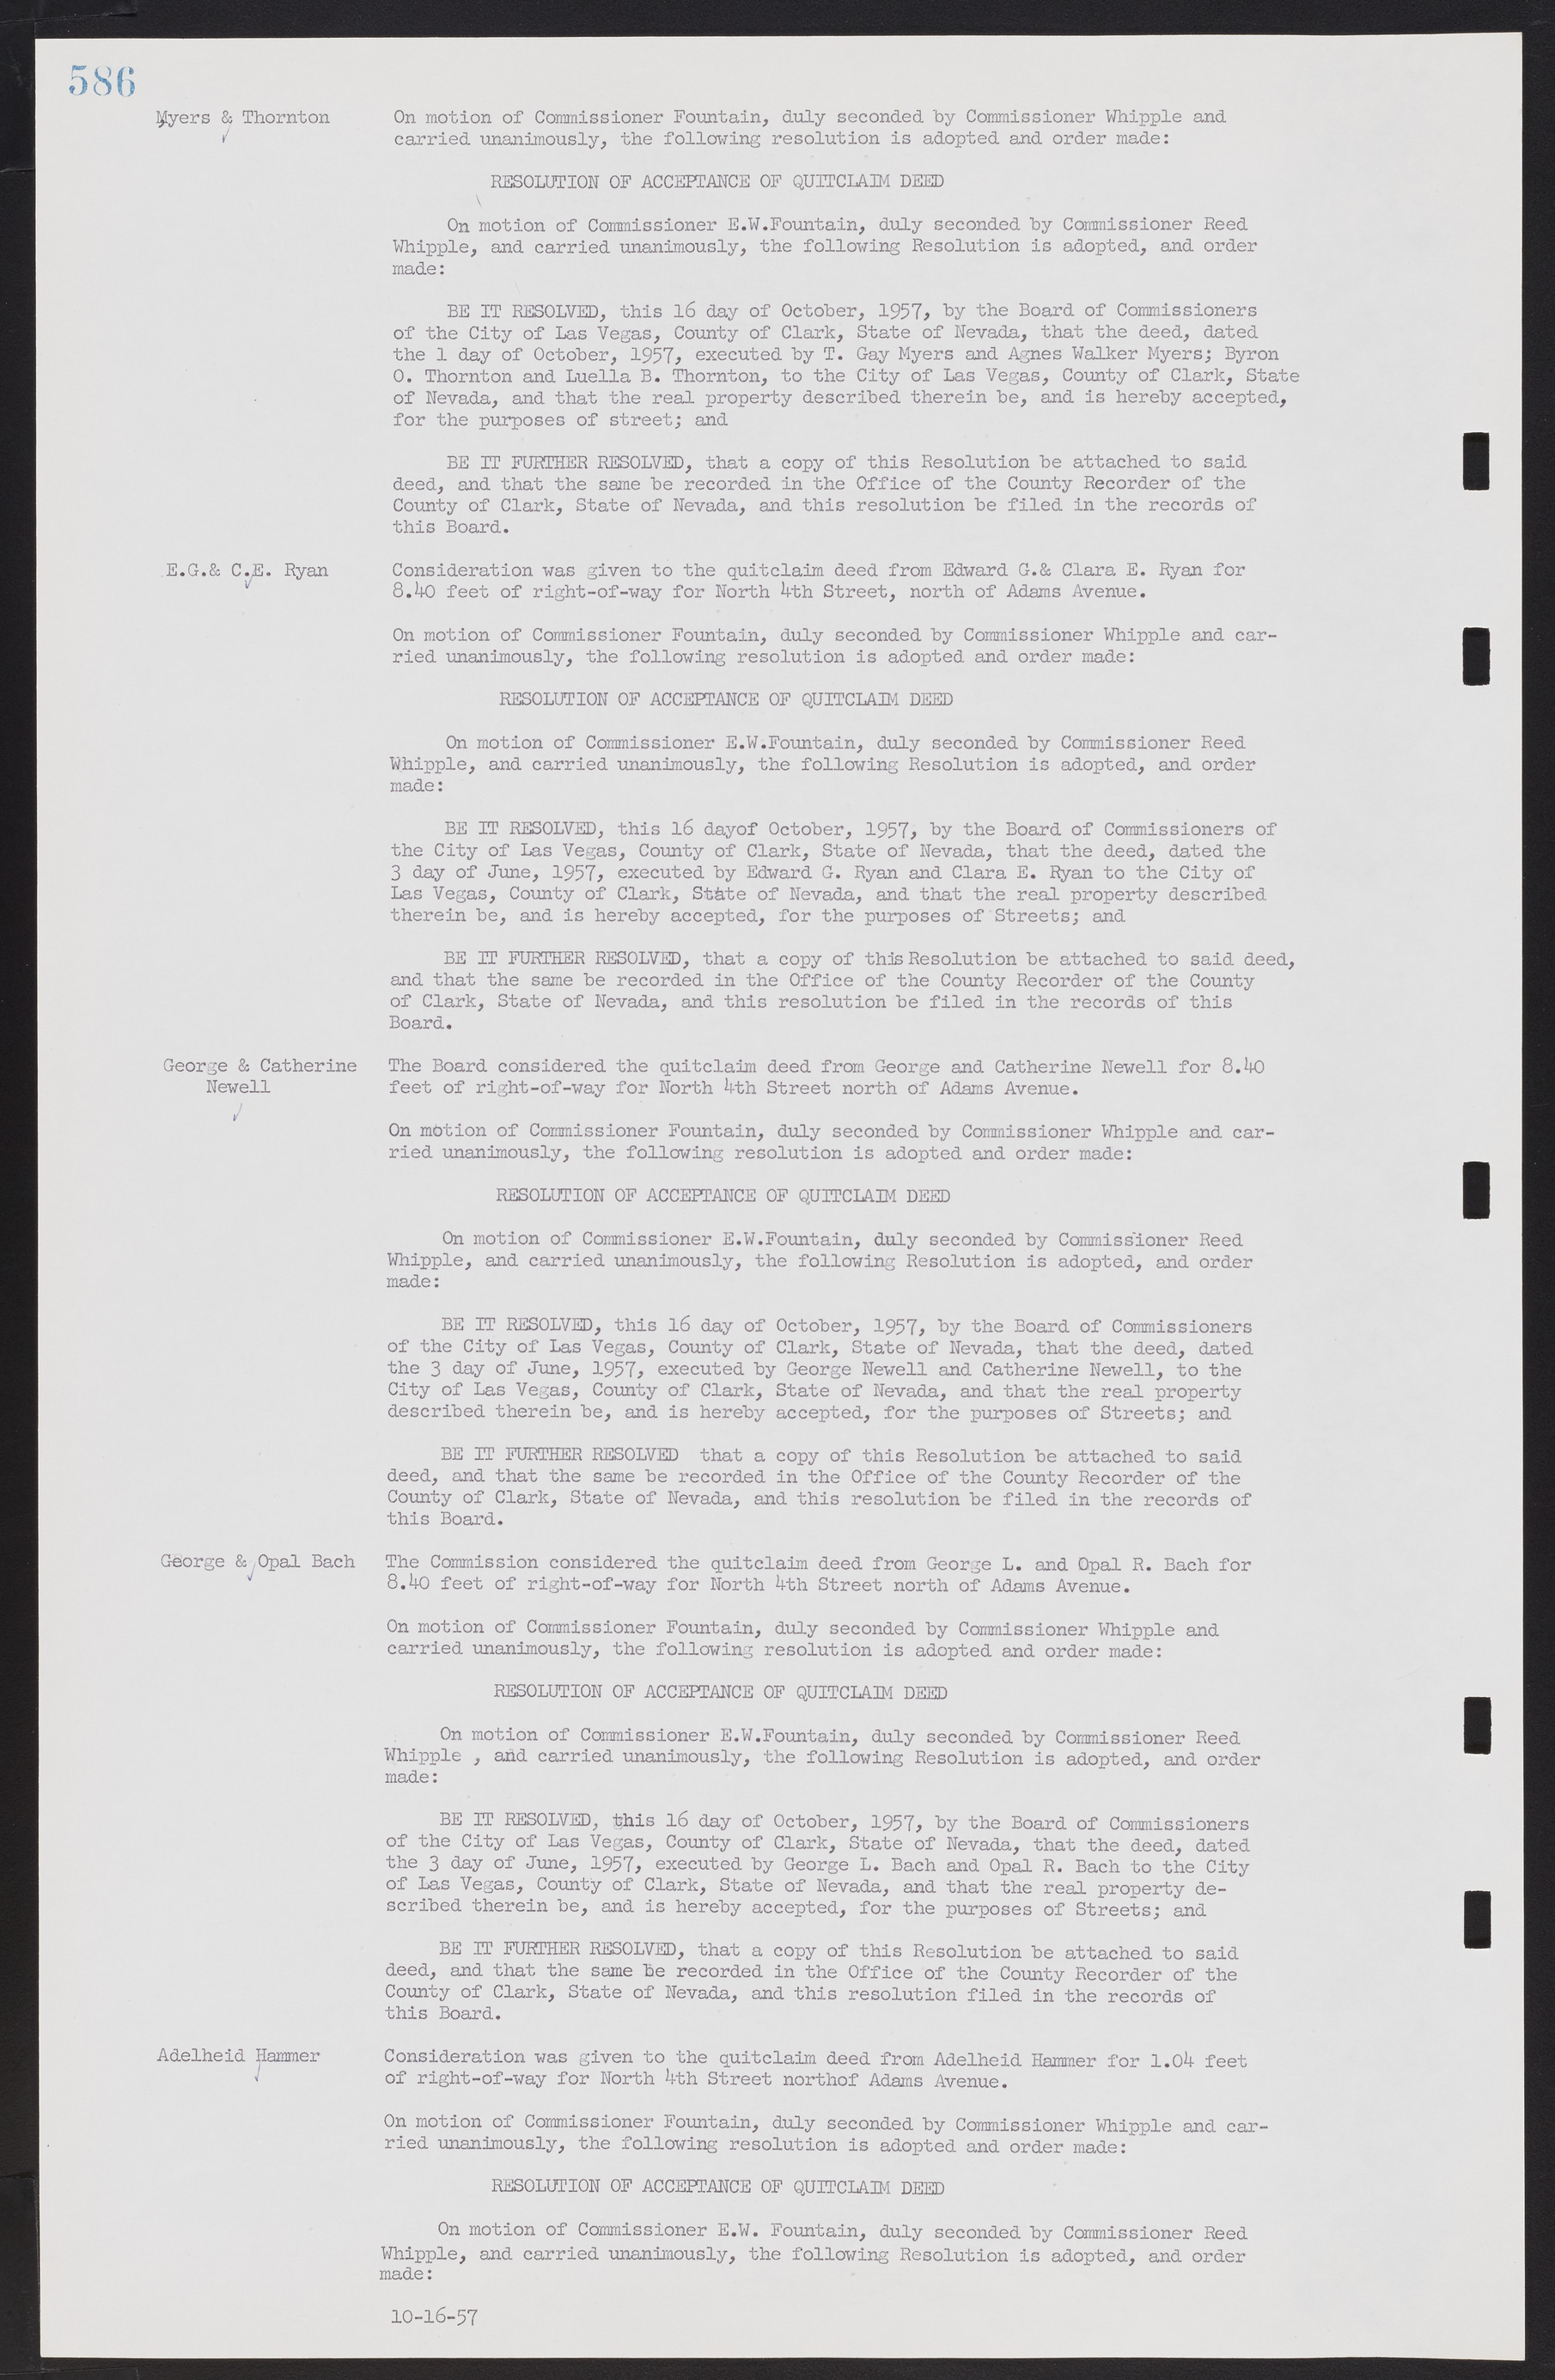 Las Vegas City Commission Minutes, September 21, 1955 to November 20, 1957, lvc000010-606